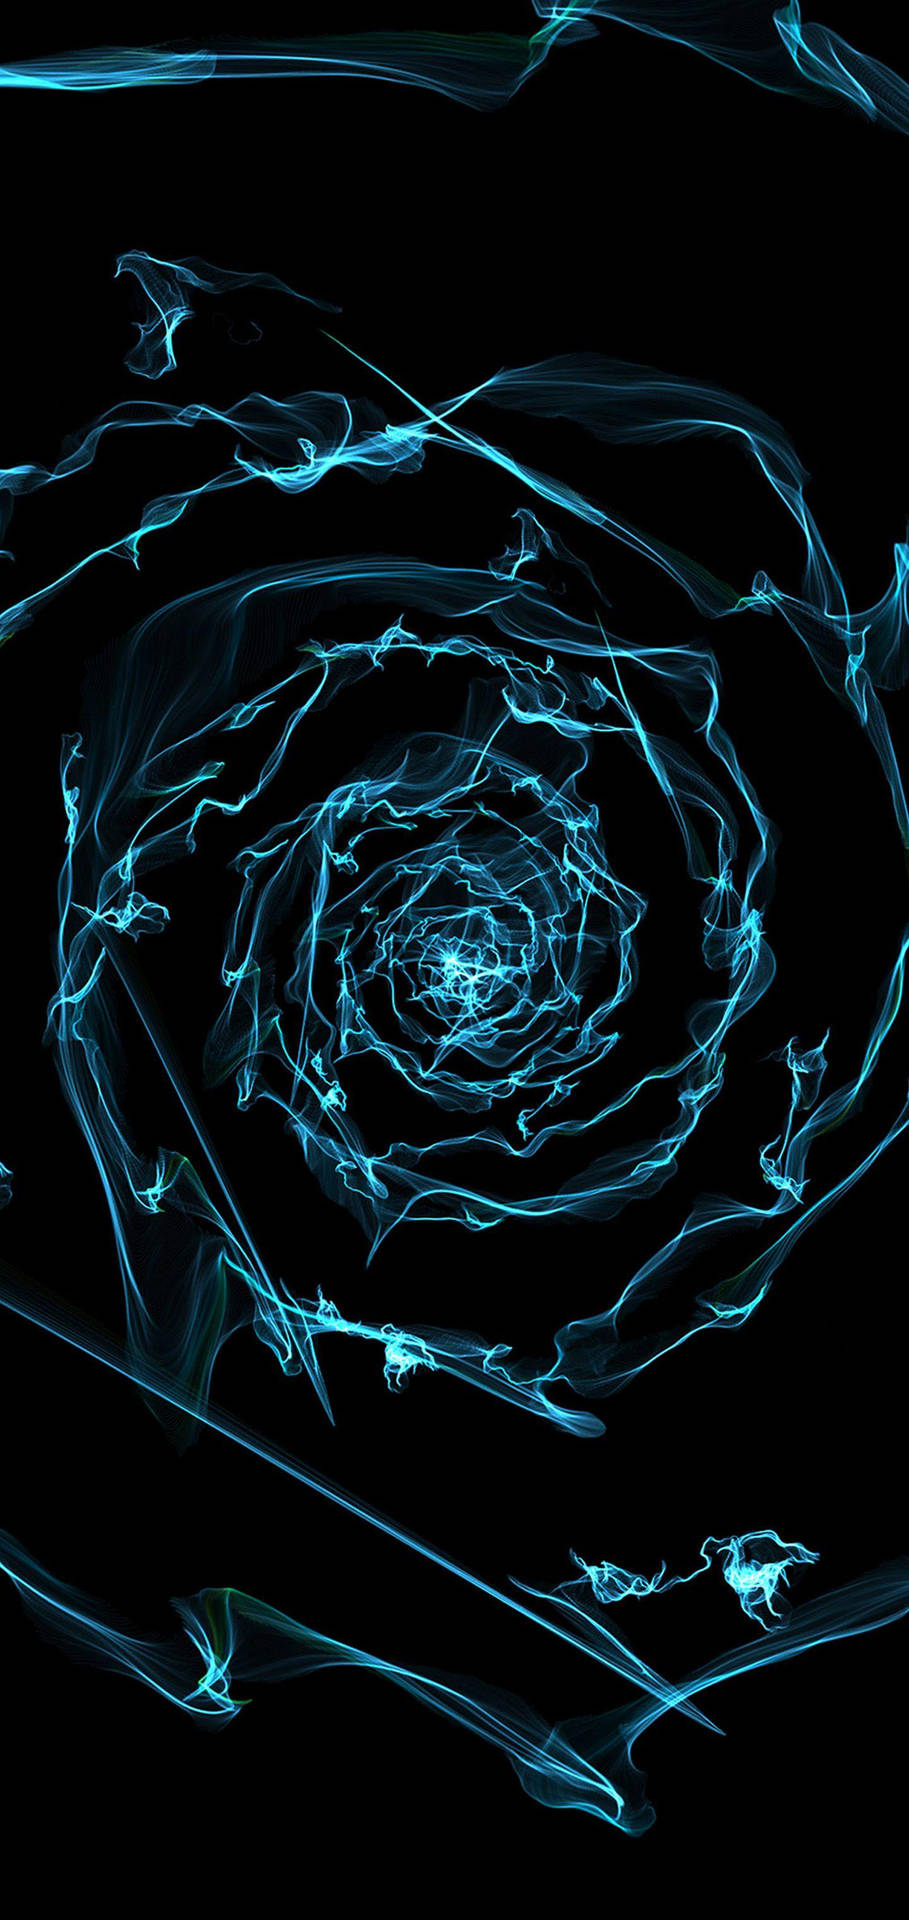 Spiralenabstraktes Galaxy S10 Wallpaper